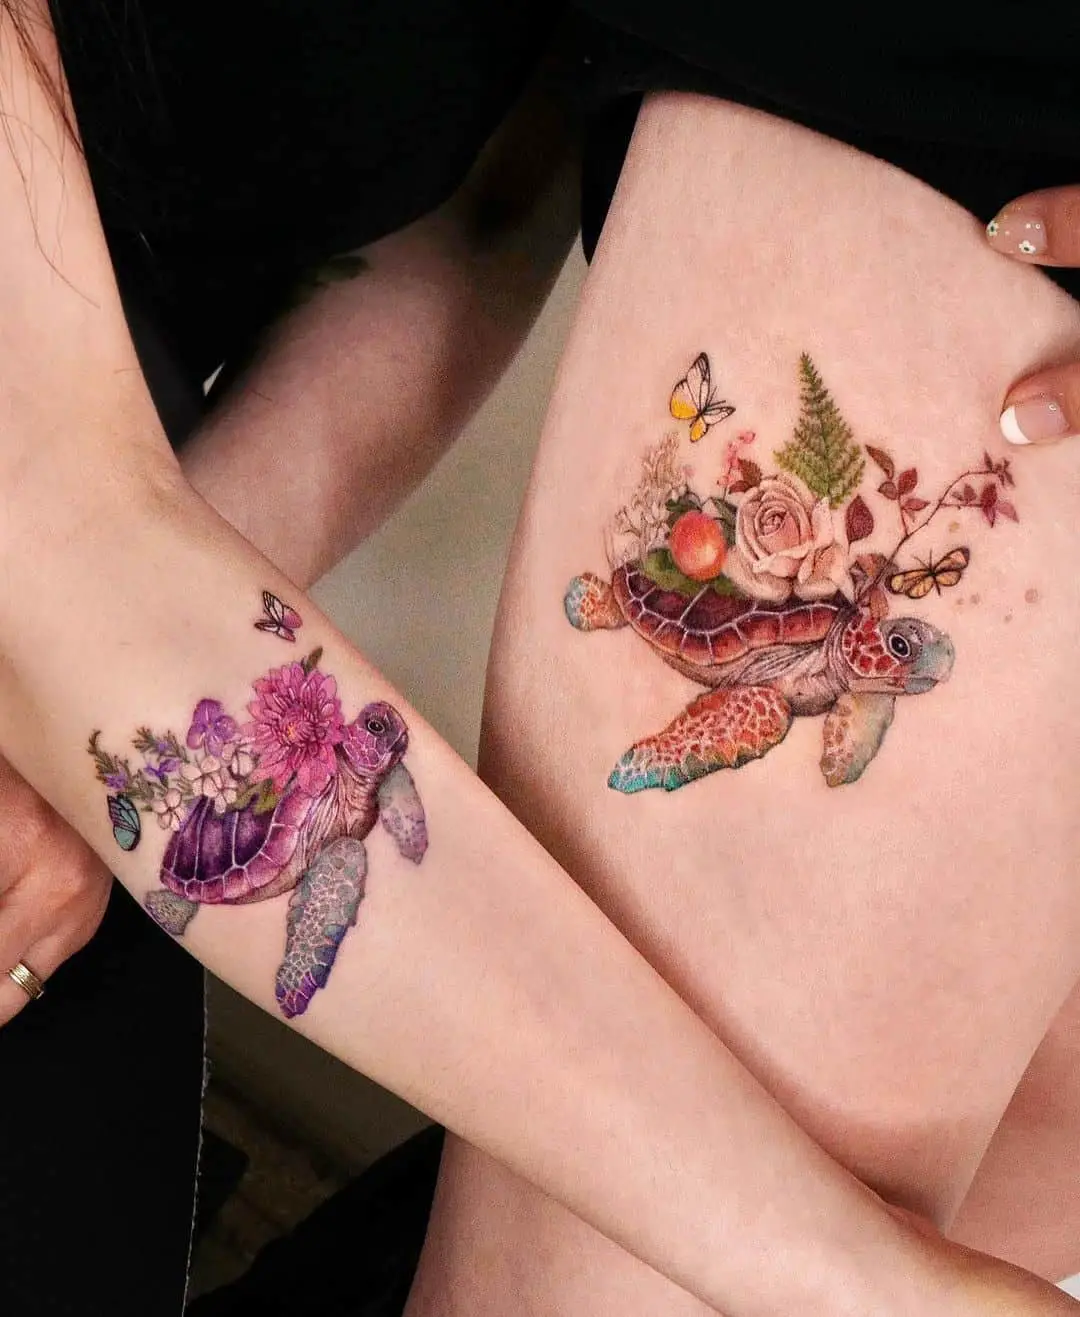 Cute matching tattoo design by vismstudio